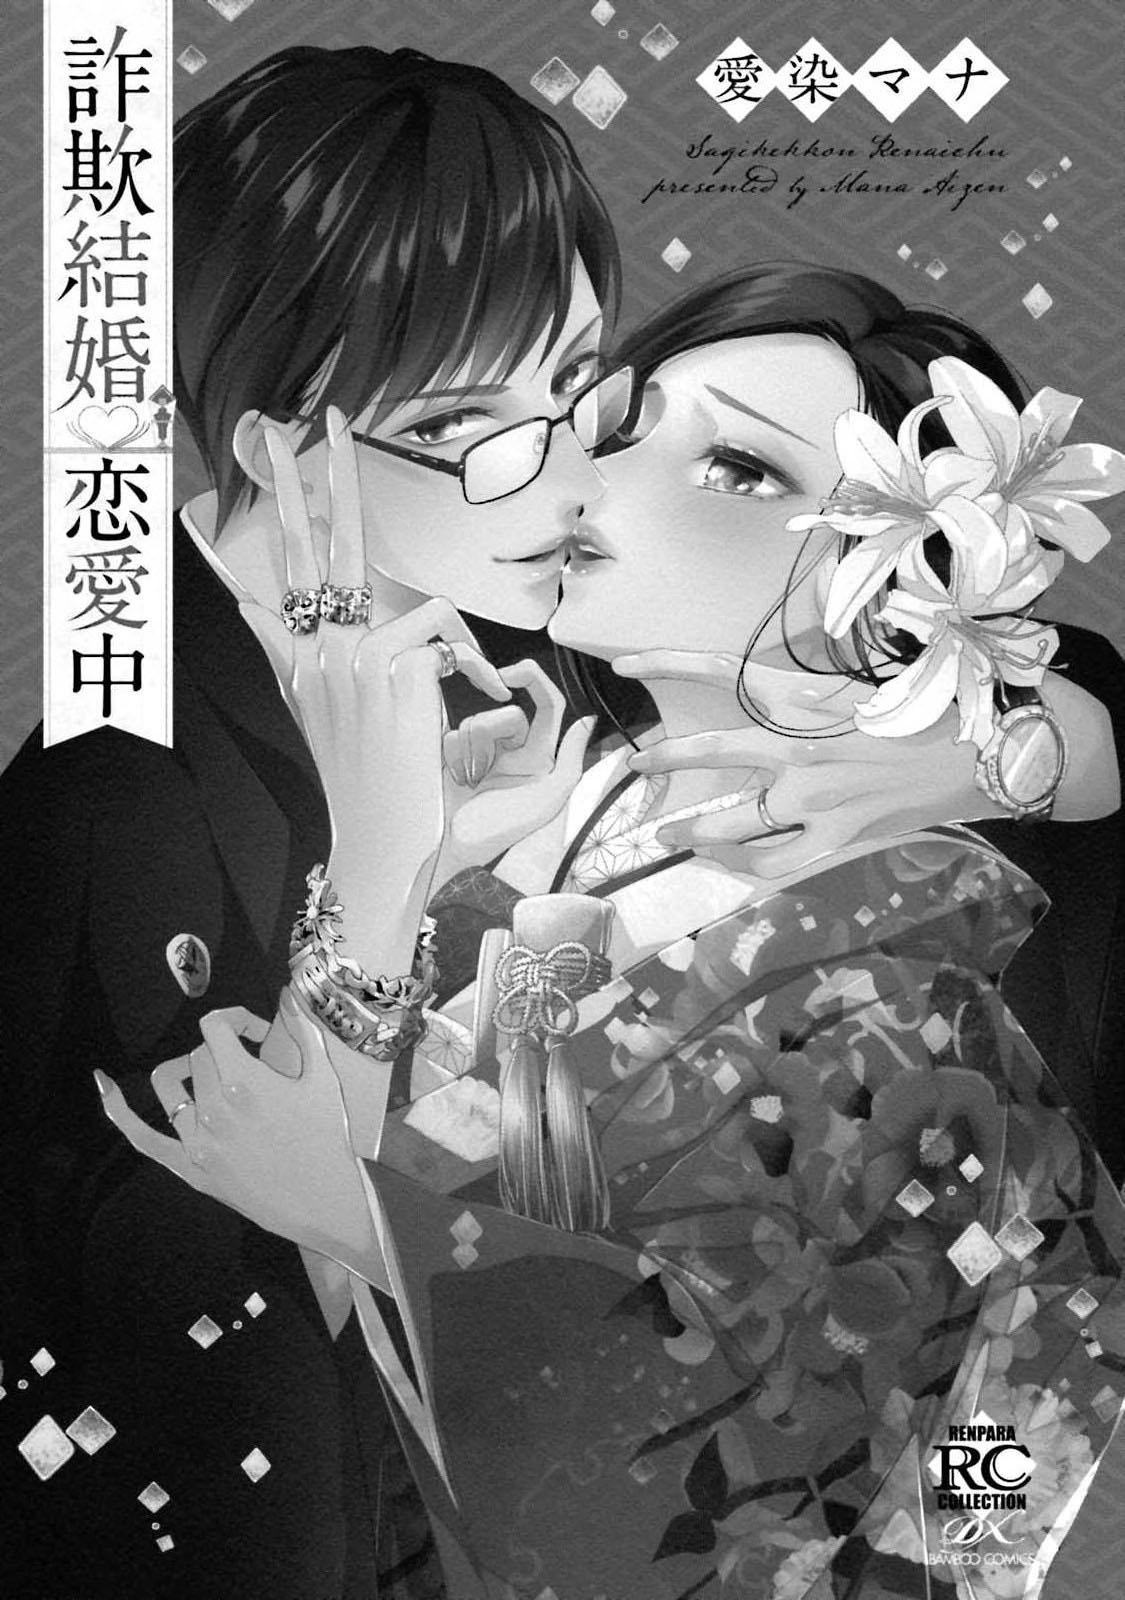 Free Sagi Kekkon Renaichuu 本篇+after story Couple Sex - Picture 3